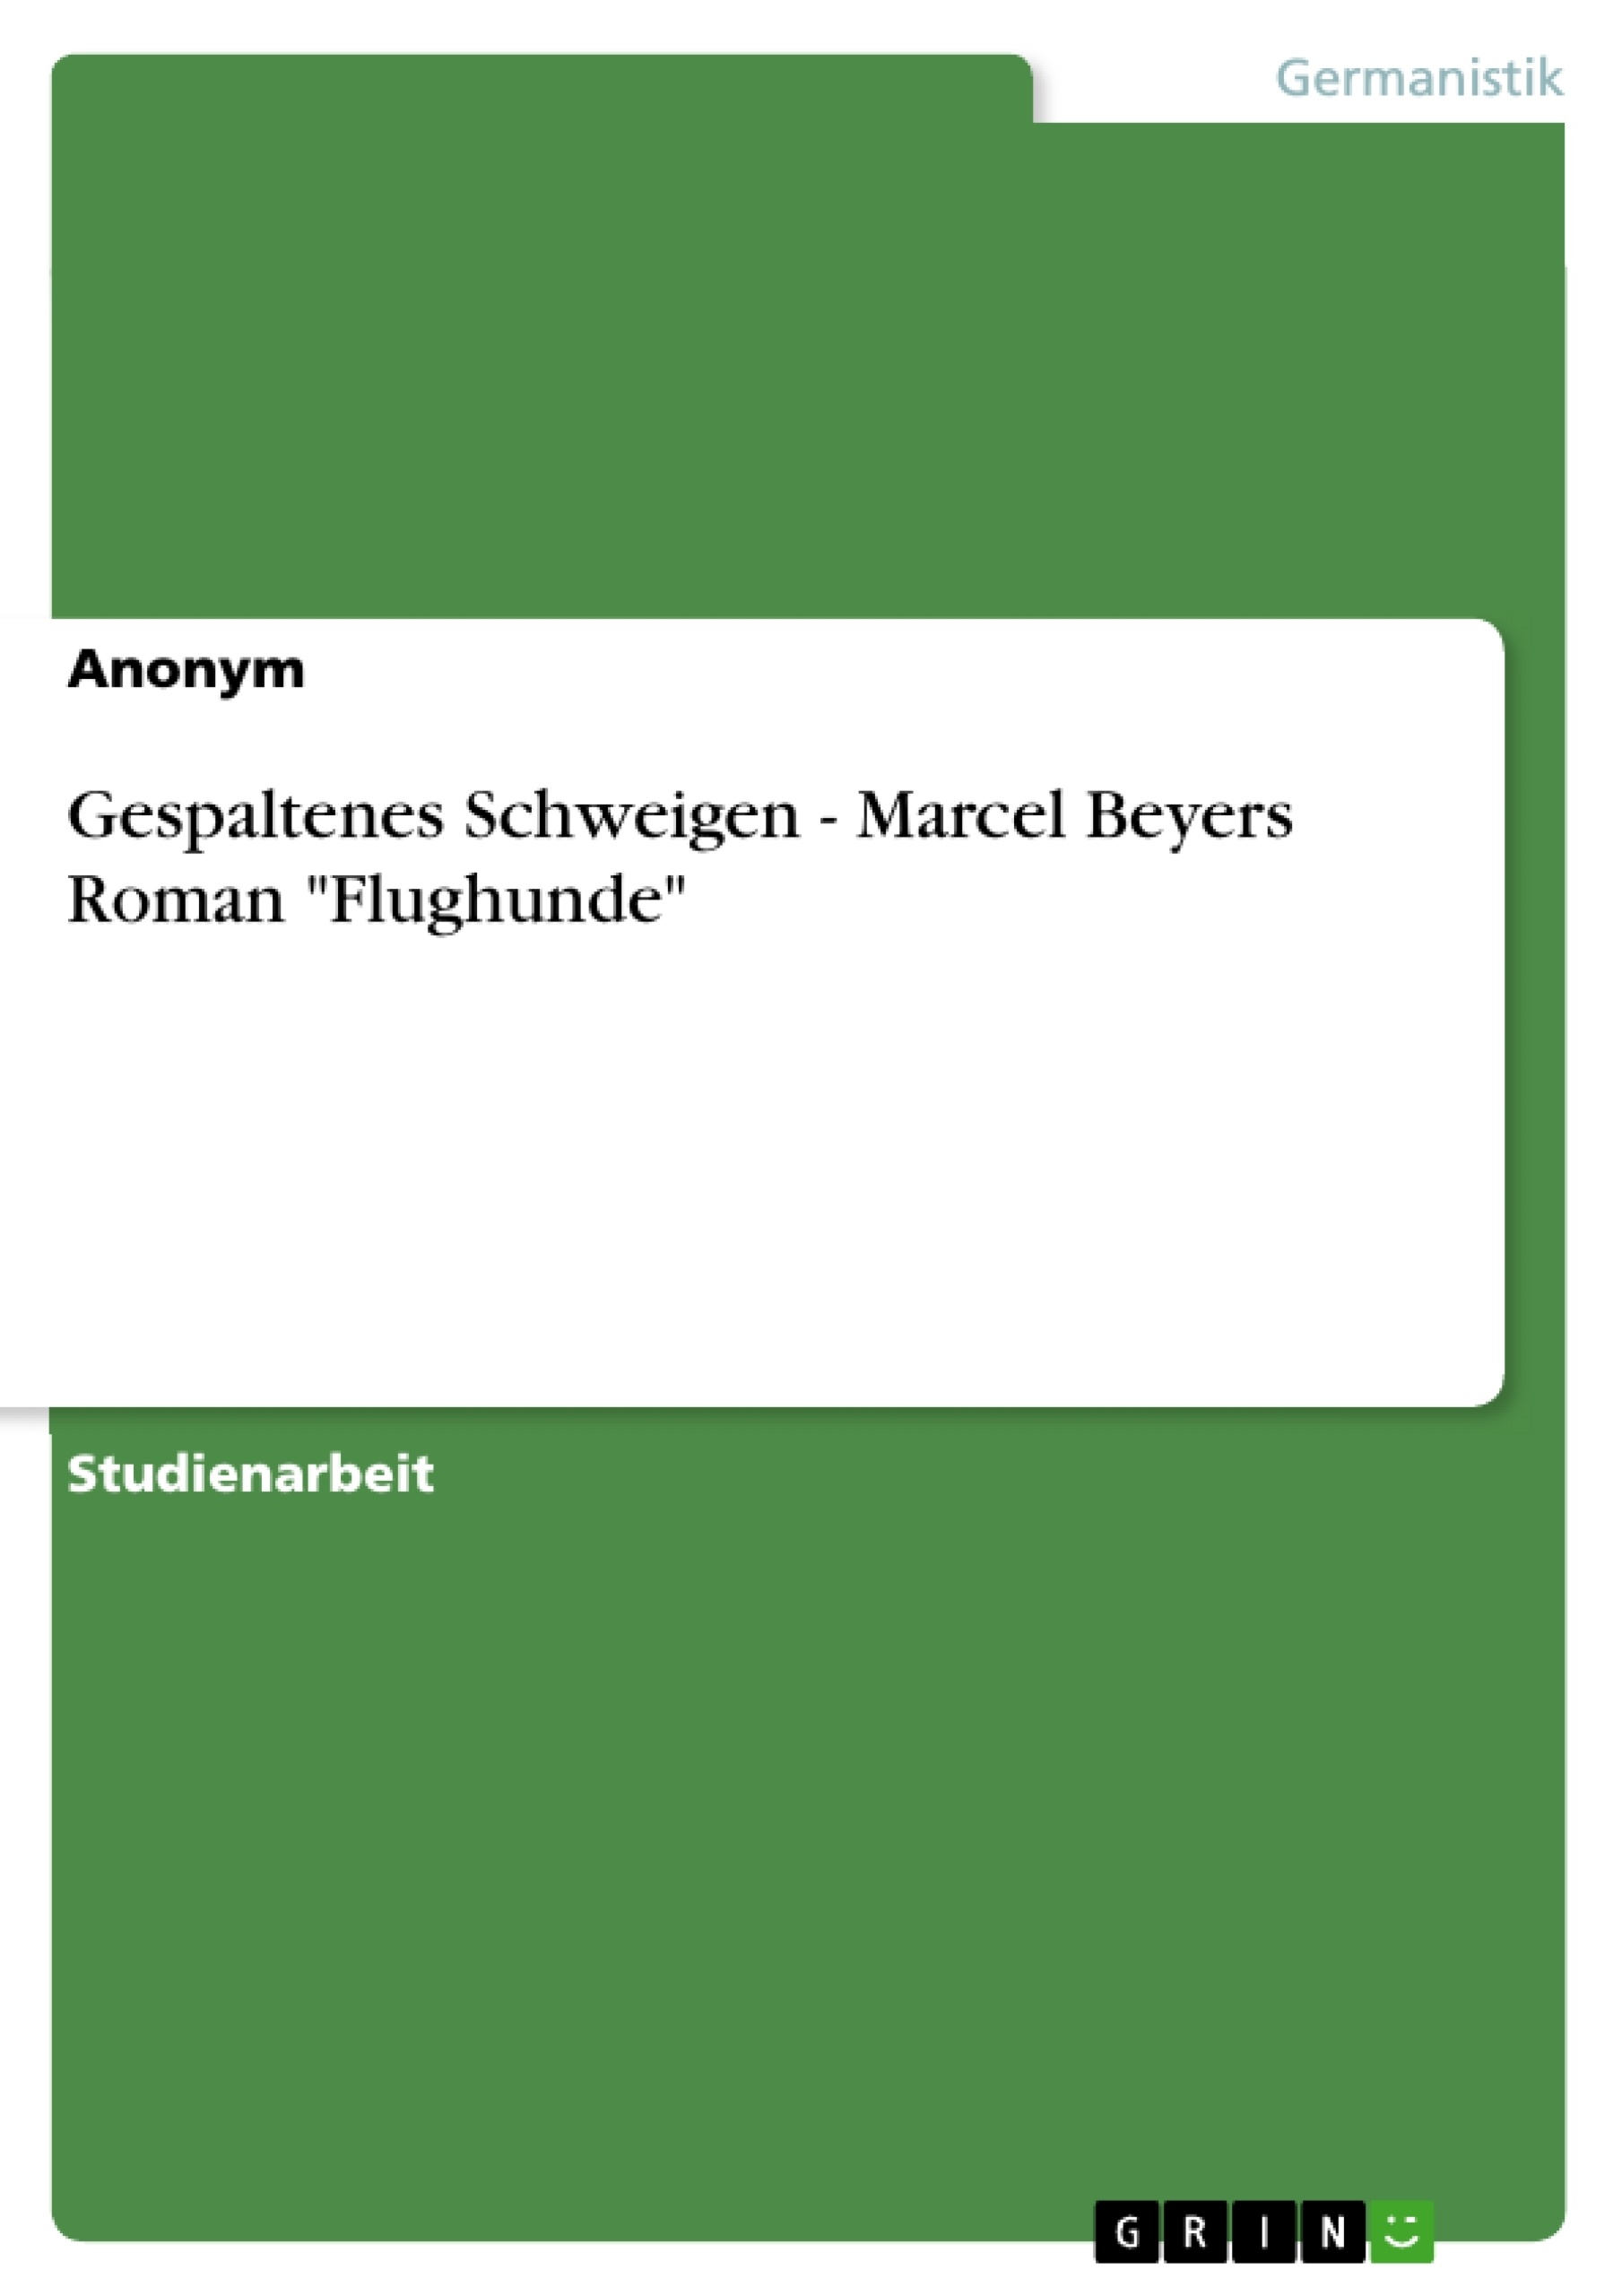 Titre: Gespaltenes Schweigen - Marcel Beyers Roman "Flughunde"